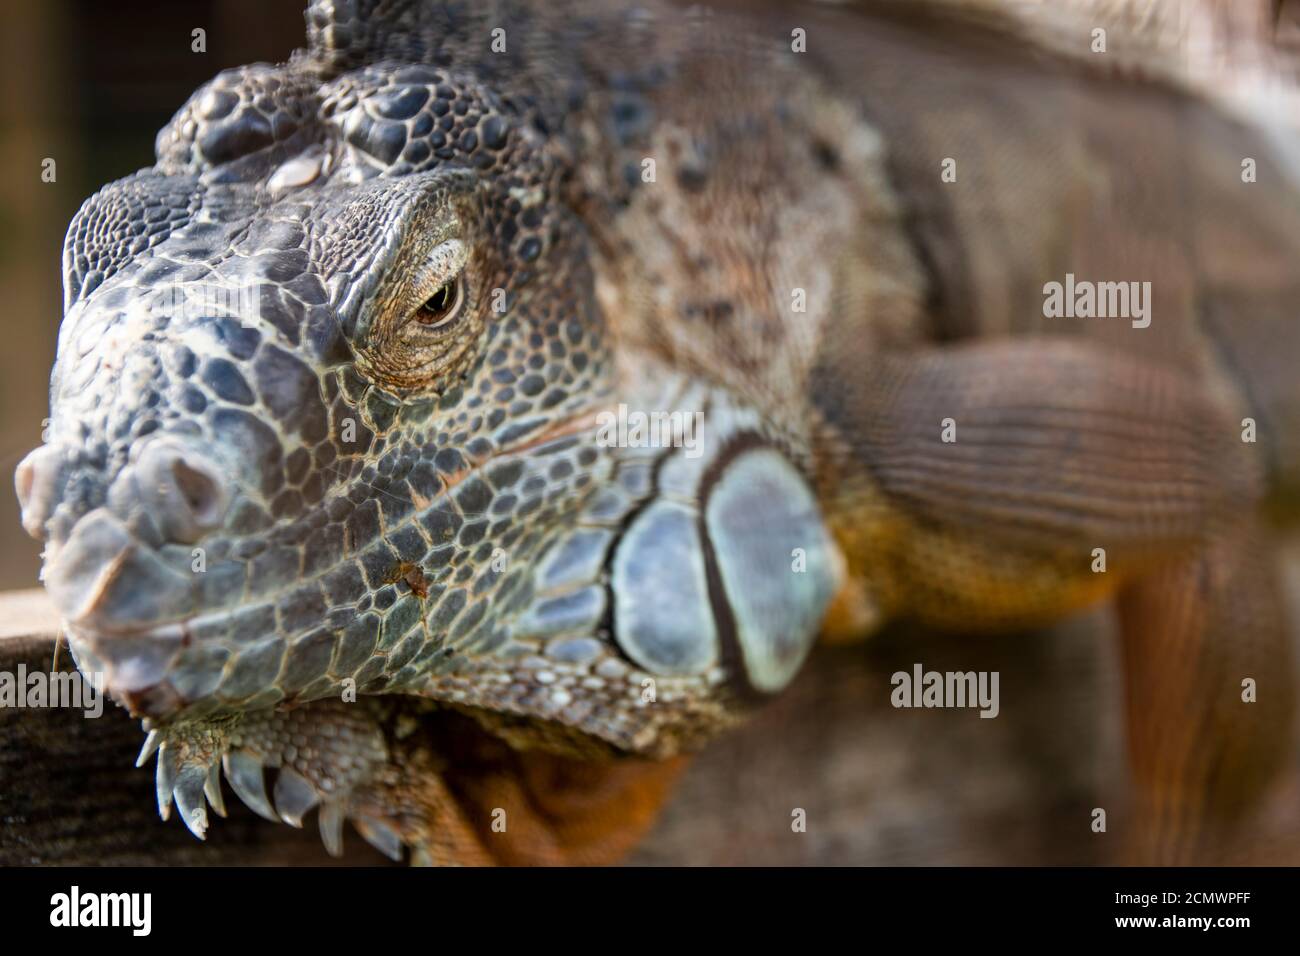 Big beautiful iguana lizard up close Stock Photo